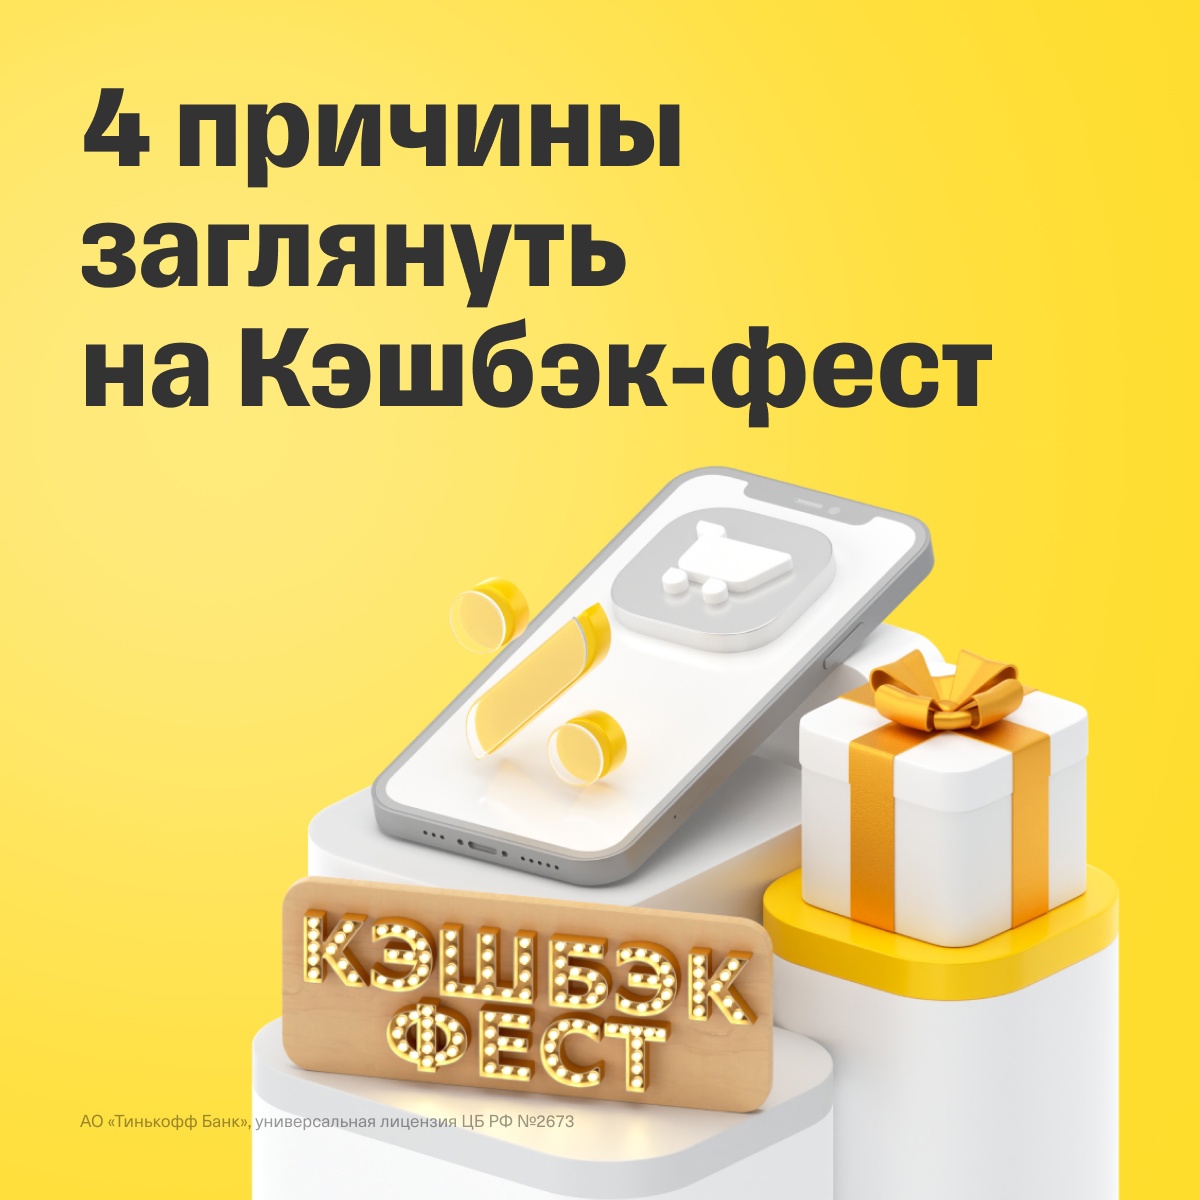 Промо-акция Тинькофф Банк: «Кэшбэк-фест»